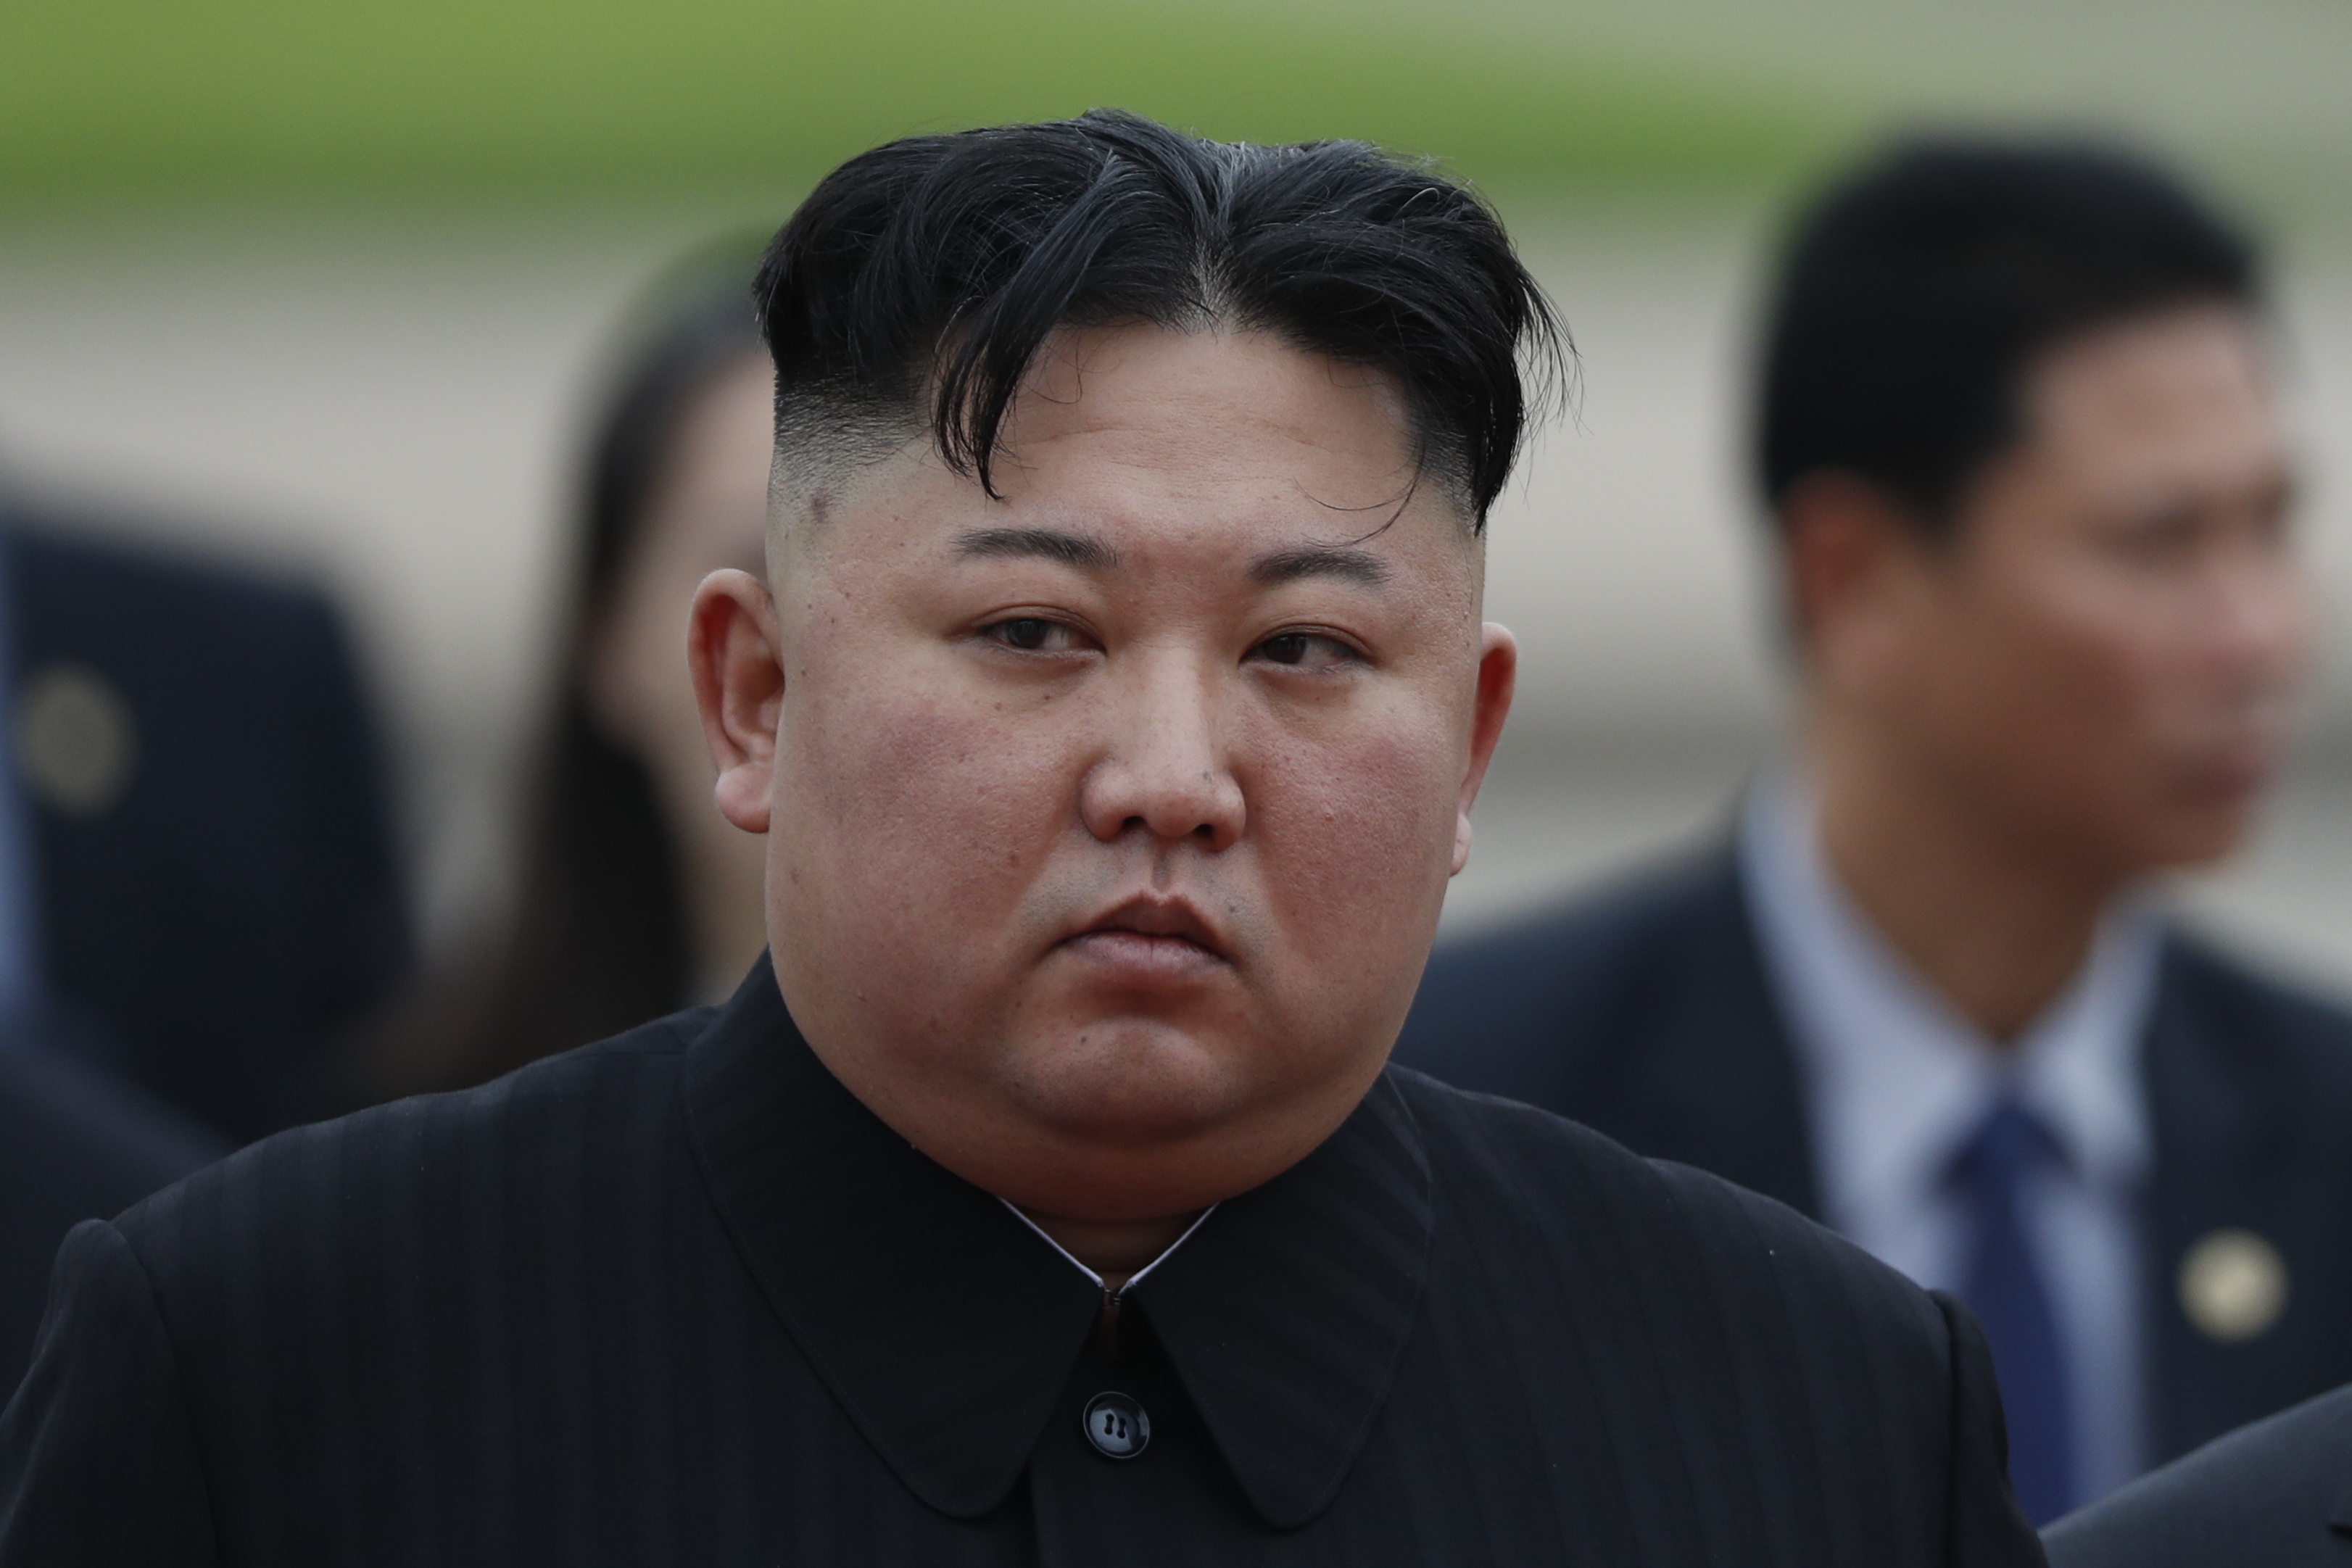 El líder norcoreano, Kim Jong-un. EFE/EPA/JORGE SILVA/Archivo
